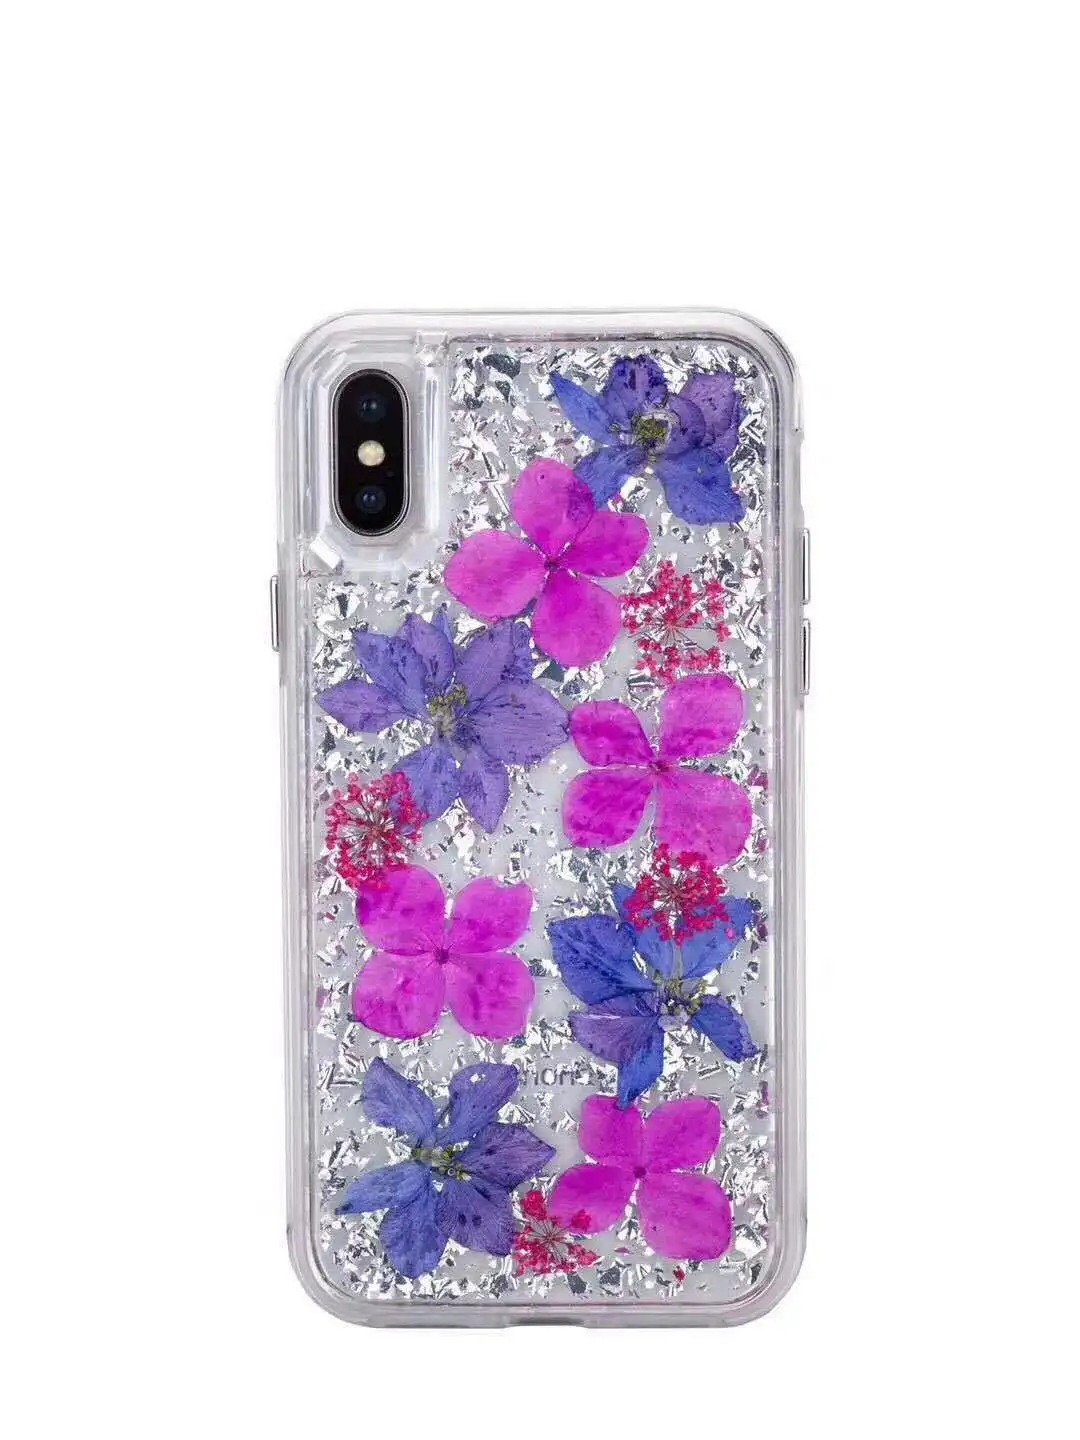 Грязеотталкивающий чехол Karat, лепестки цветов, блестящий чехол для телефона 2 в 1, мягкий чехол для Iphone X 6 6s Plus 7 8 Note S9 - Цвет: 2